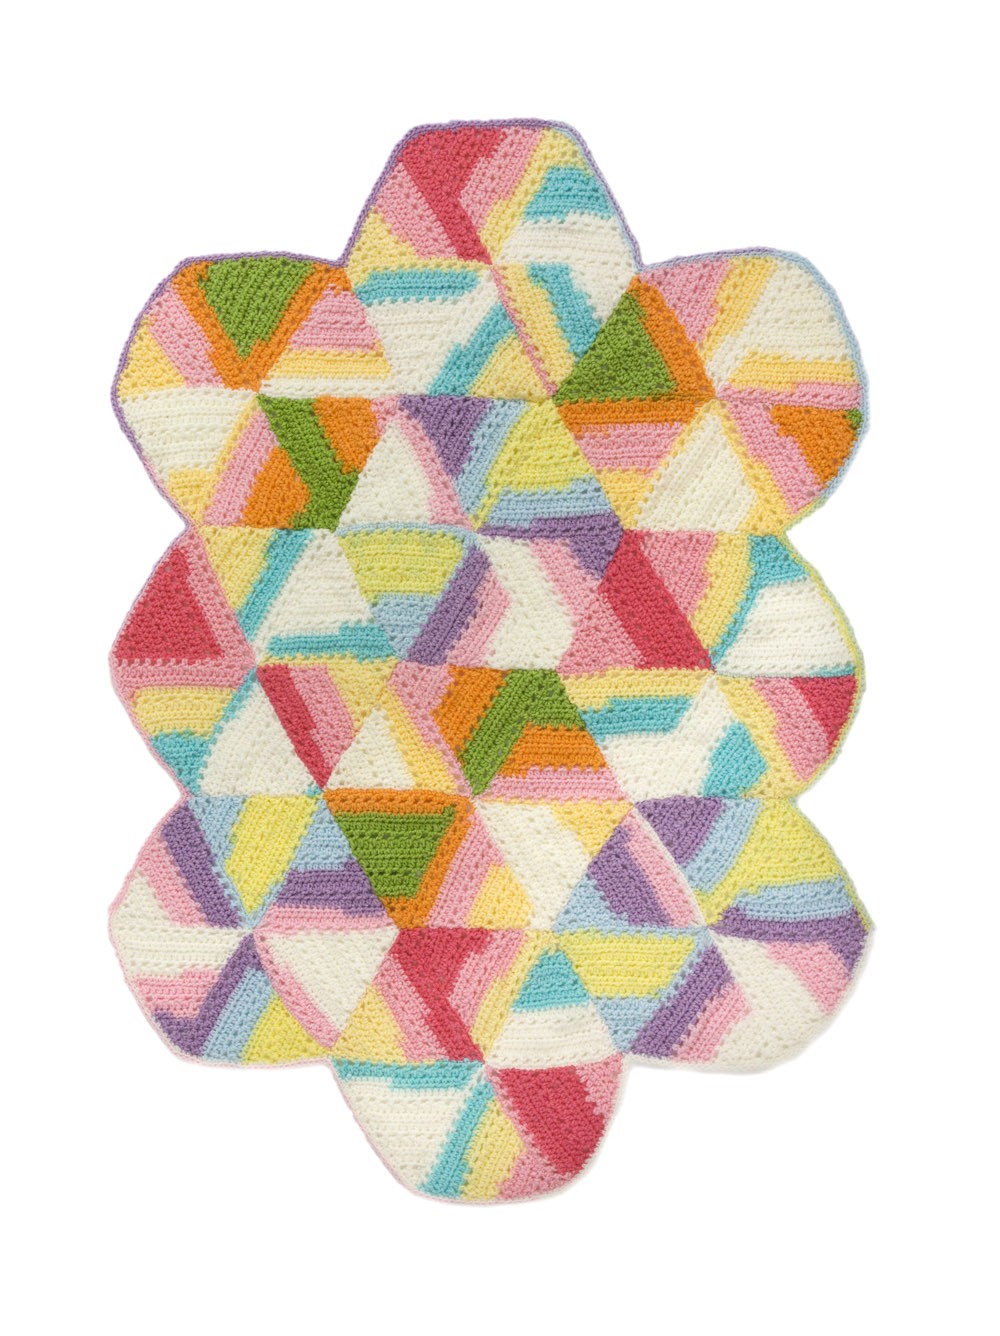 Bright Hexagon Blanket Crochet